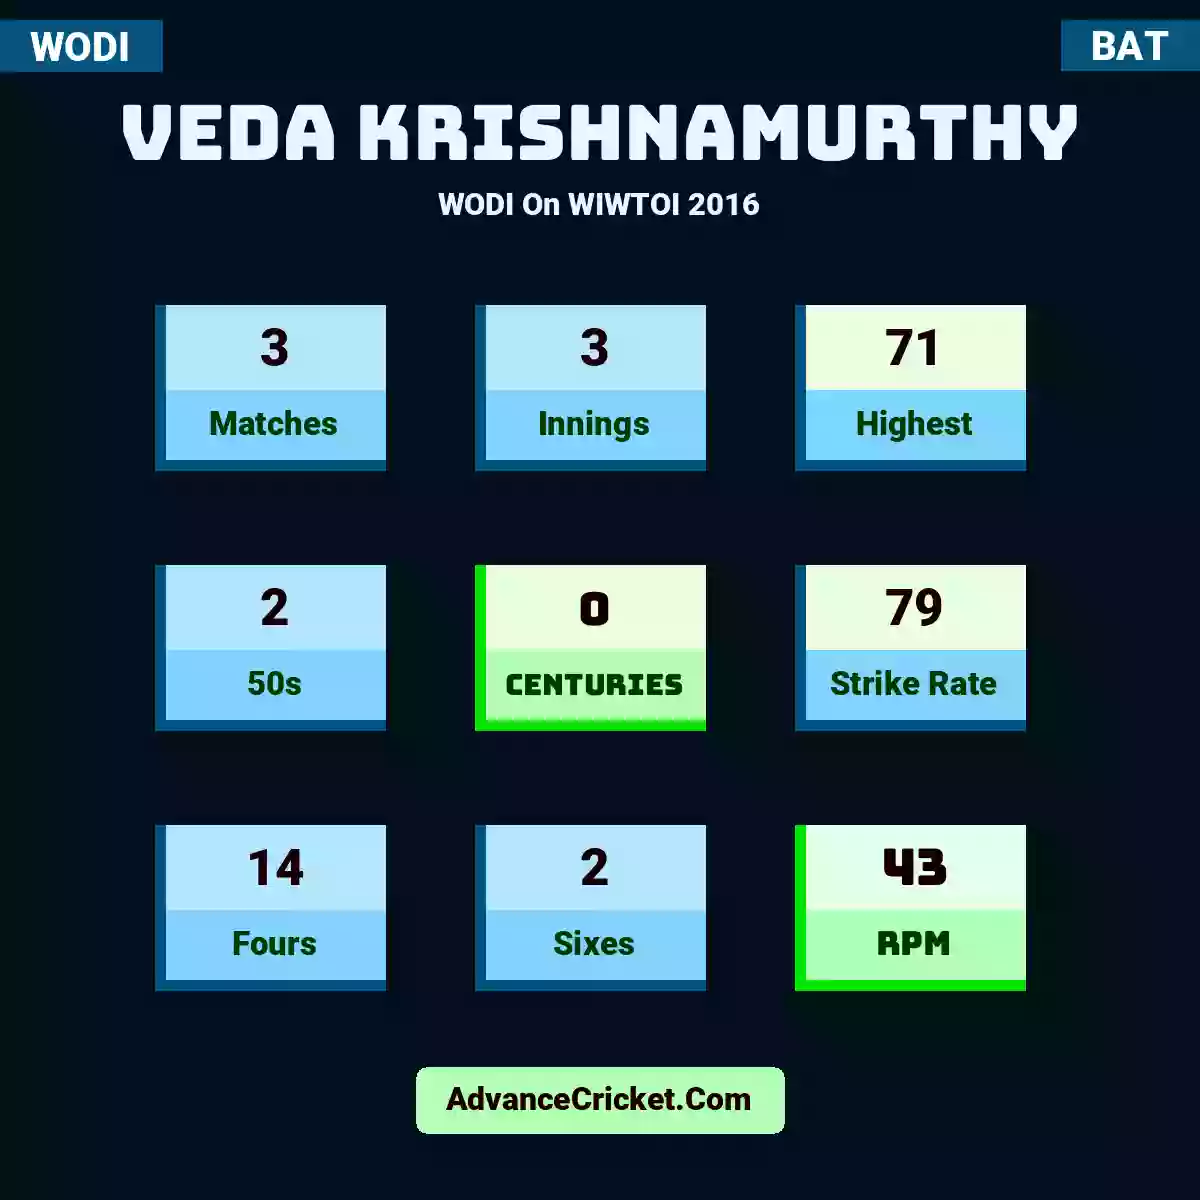 Veda Krishnamurthy WODI  On WIWTOI 2016, Veda Krishnamurthy played 3 matches, scored 71 runs as highest, 2 half-centuries, and 0 centuries, with a strike rate of 79. V.Krishnamurthy hit 14 fours and 2 sixes, with an RPM of 43.